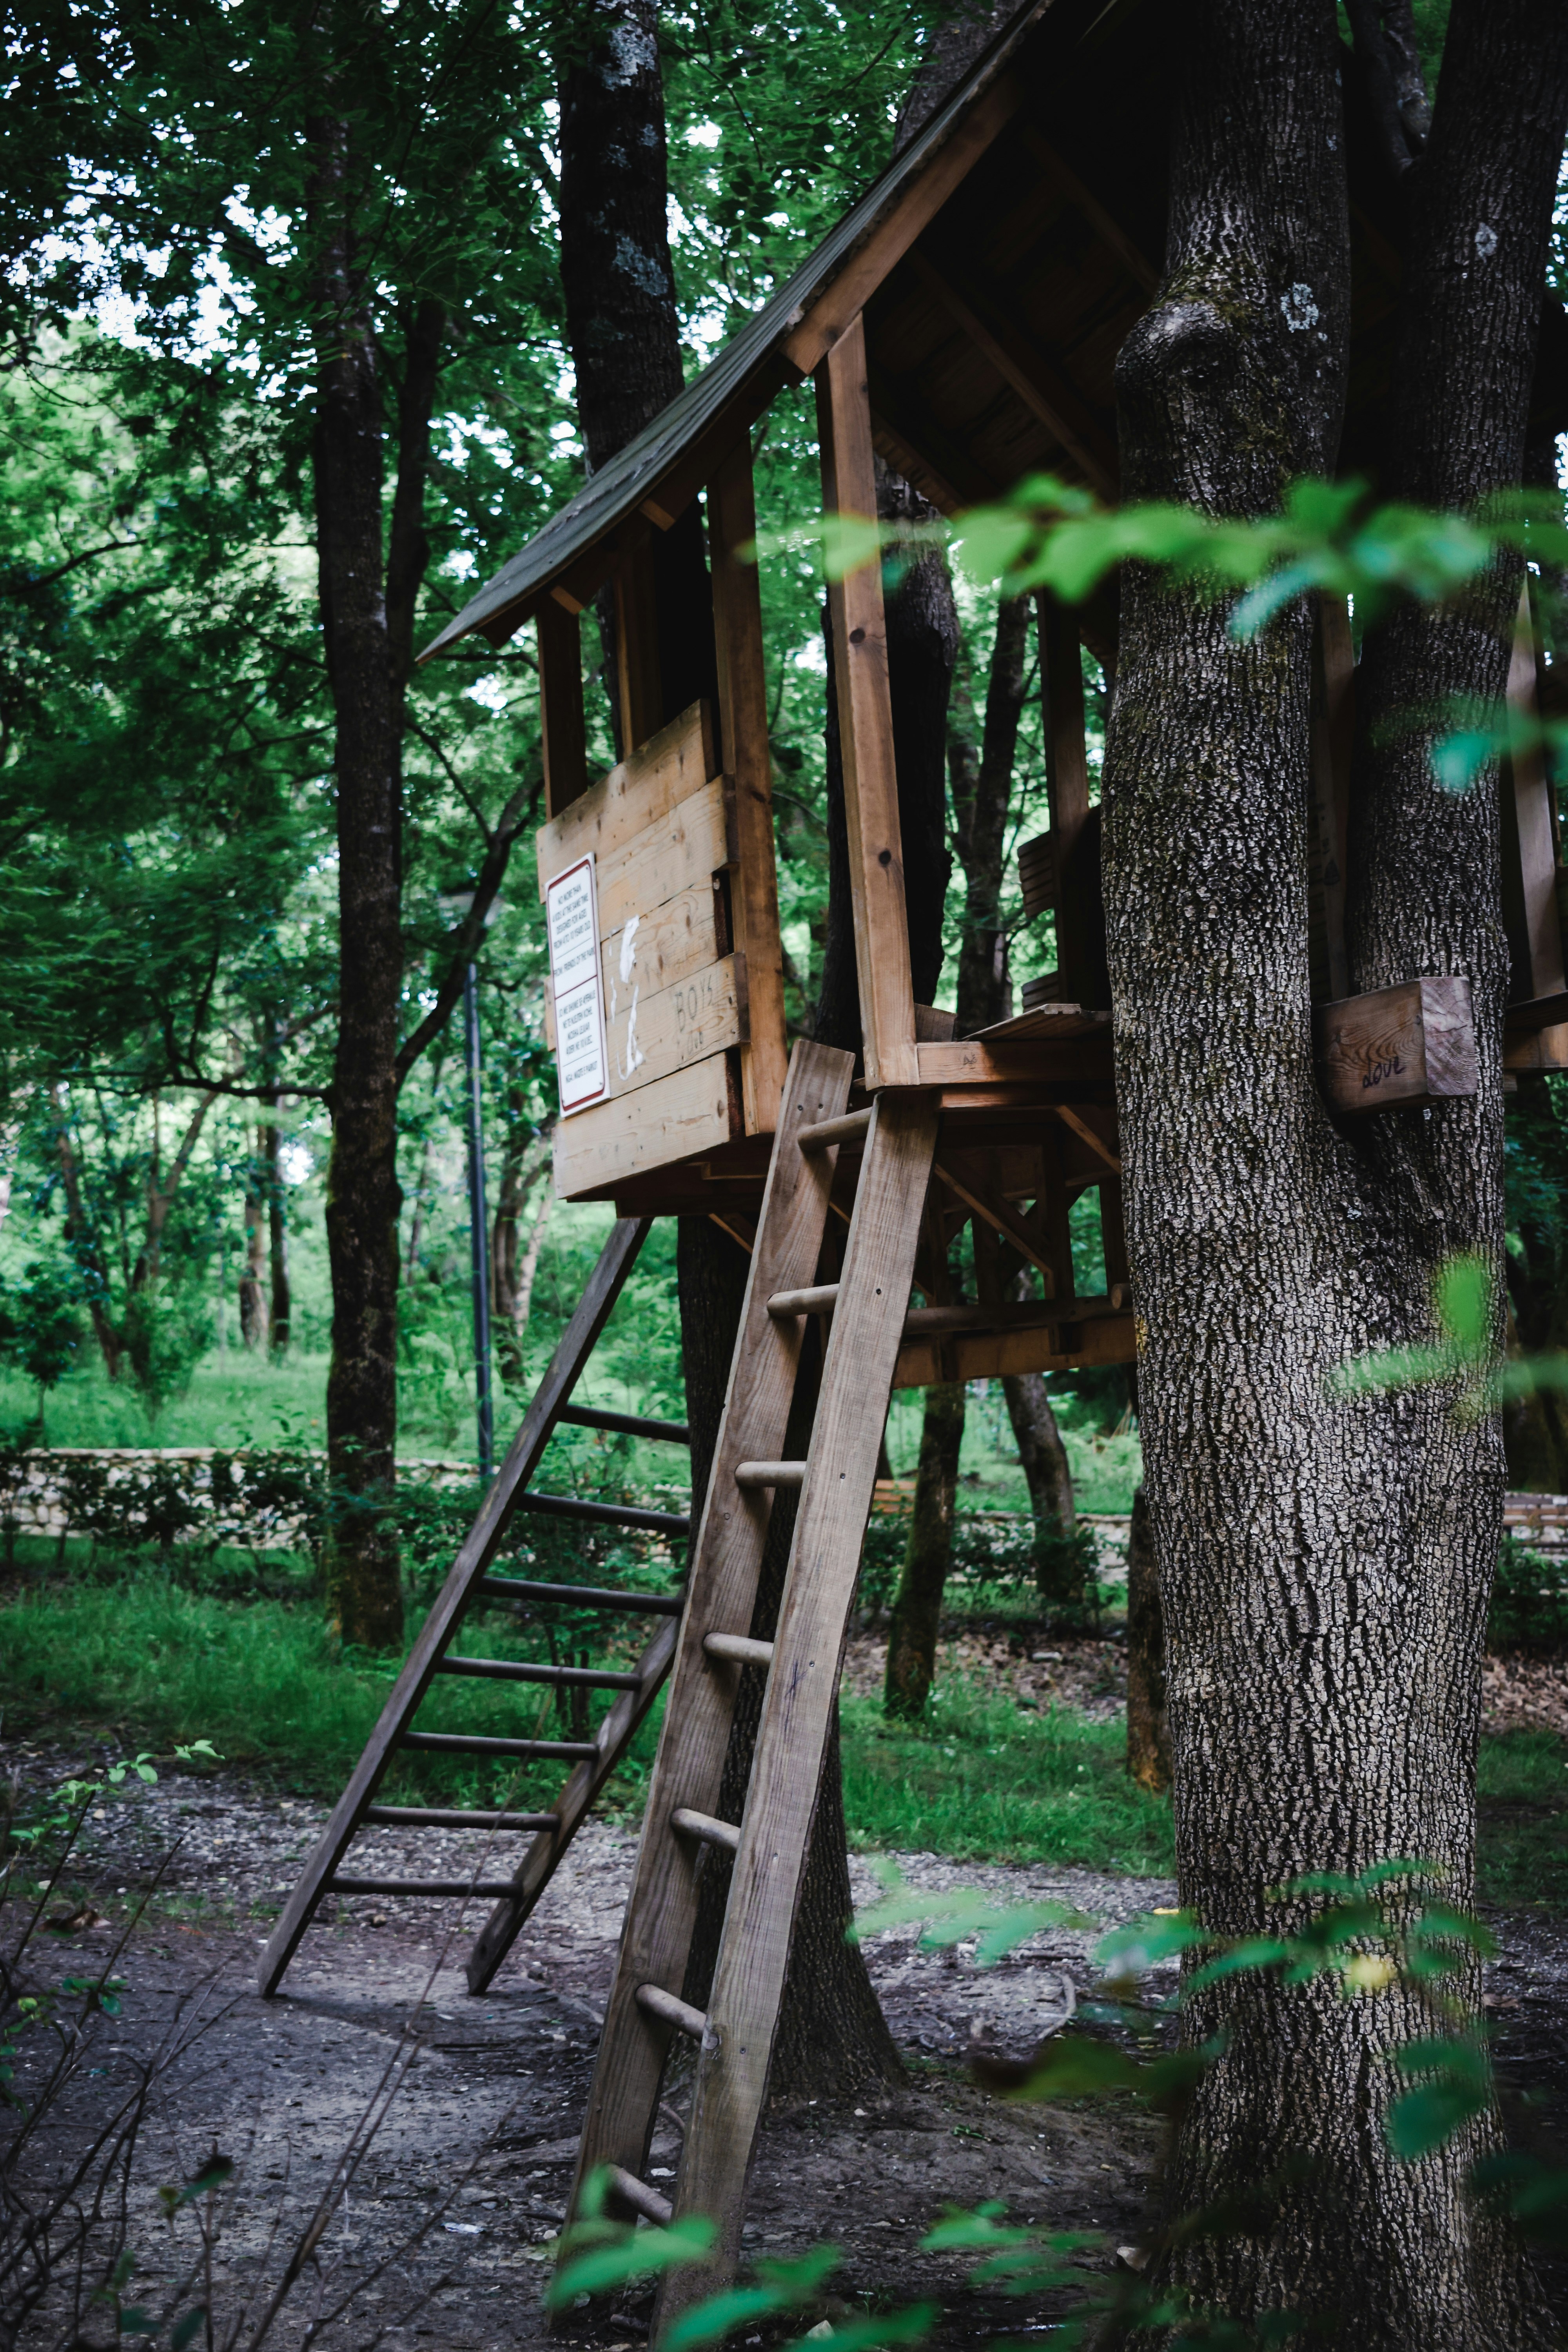 A treehouse | Source: Unsplash